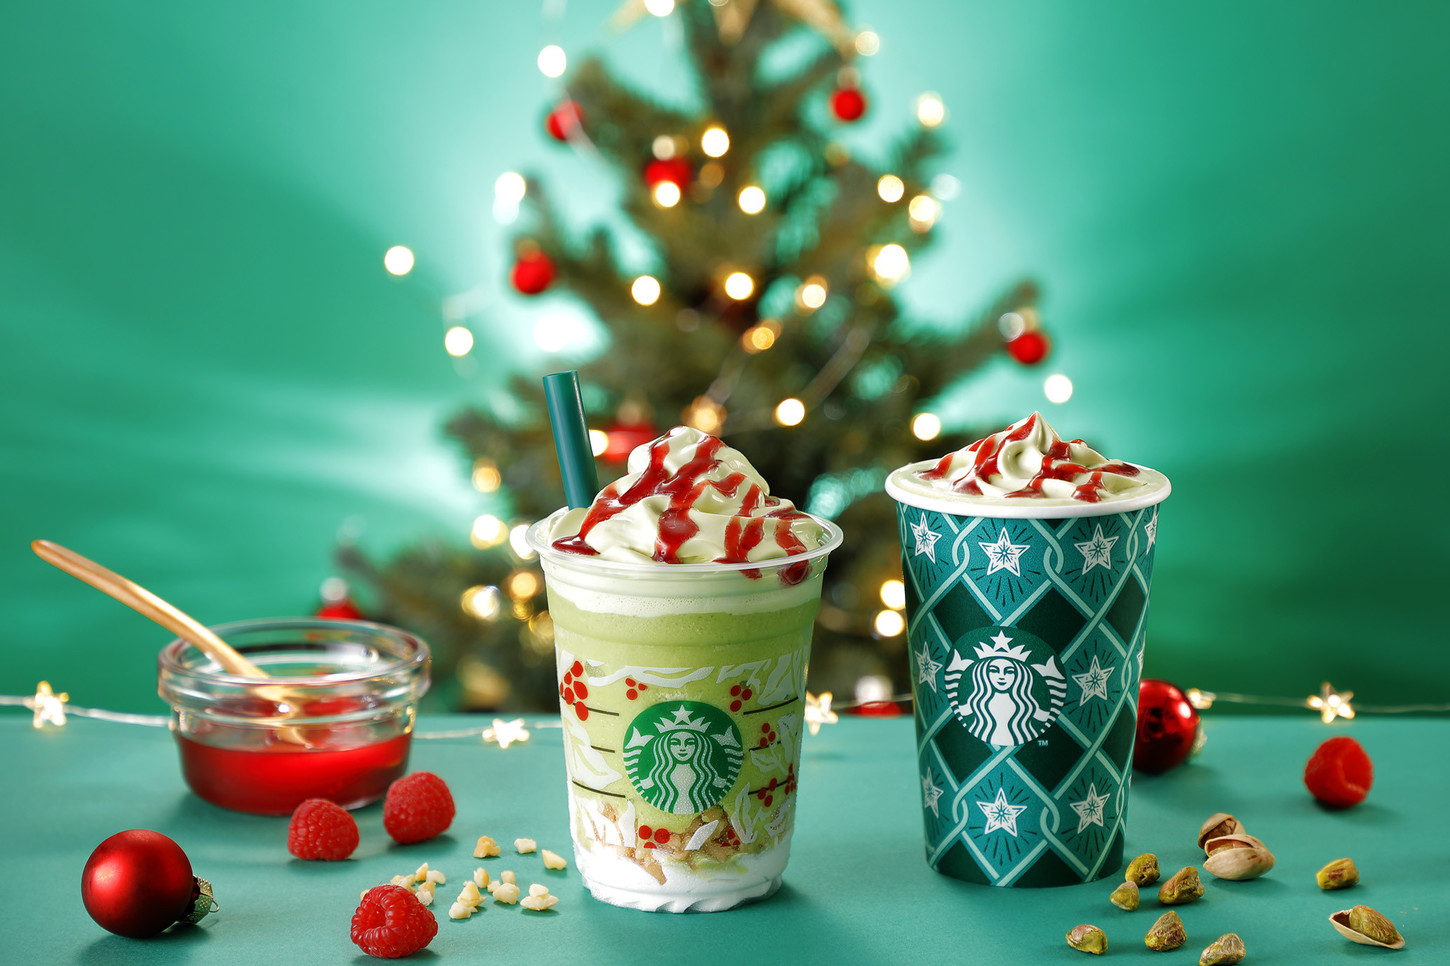 Starbucks Japan unveils new Pistachio Christmas Tree Frappuccino